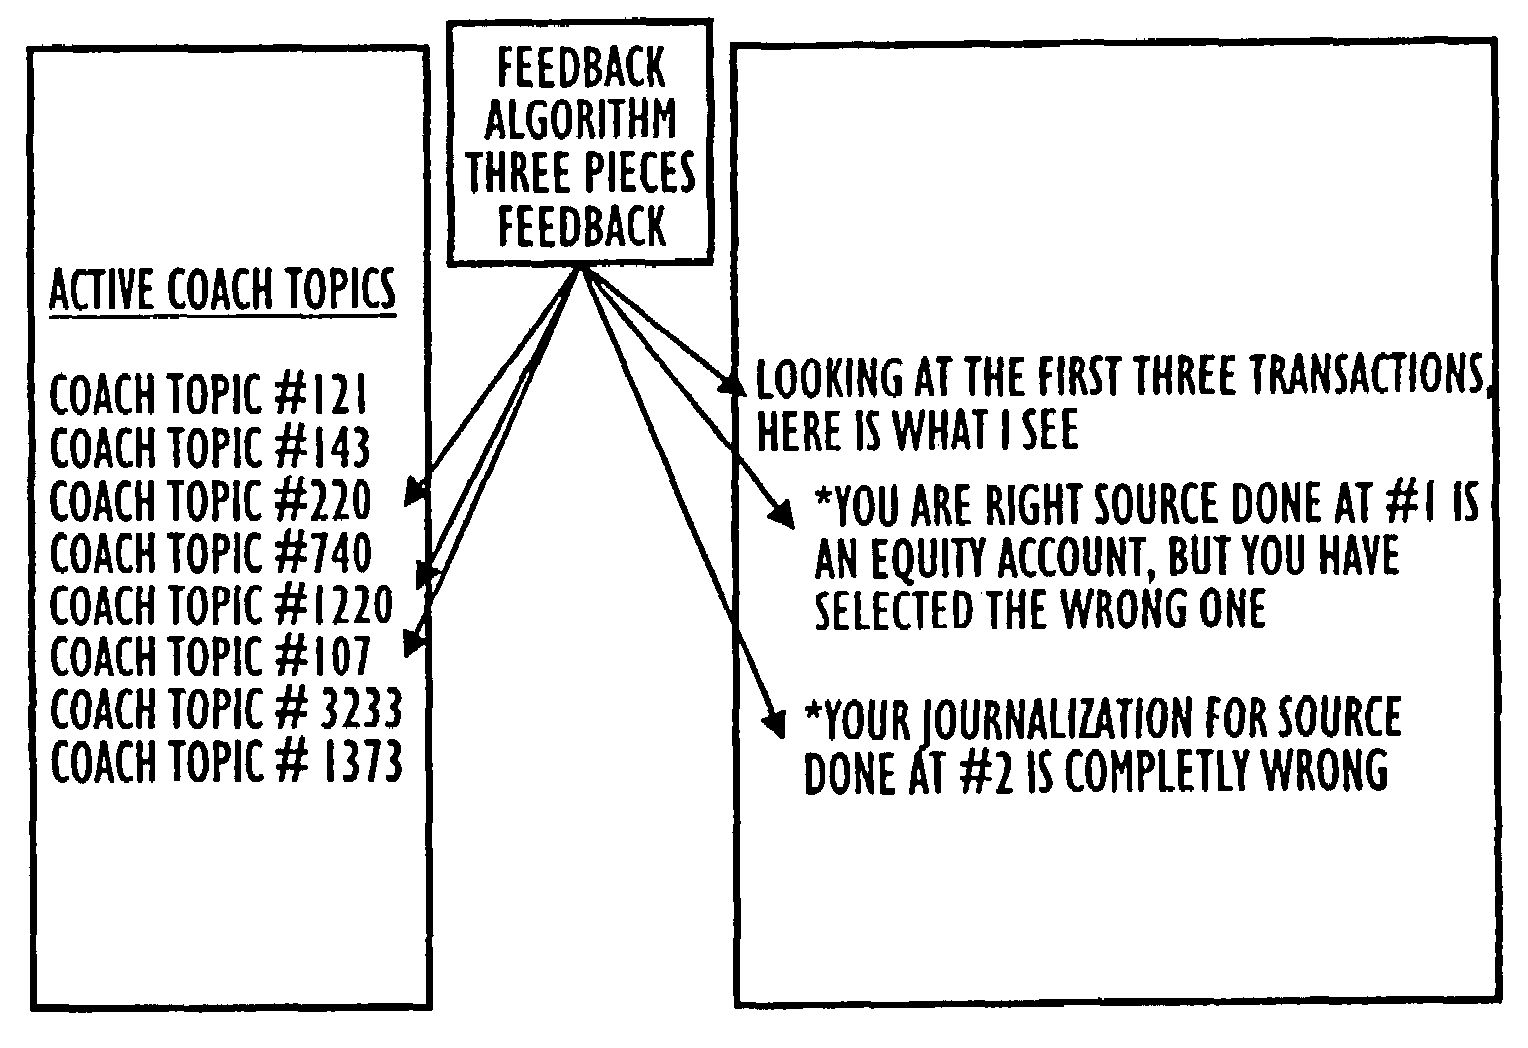 Goal based flow of a control presentation system